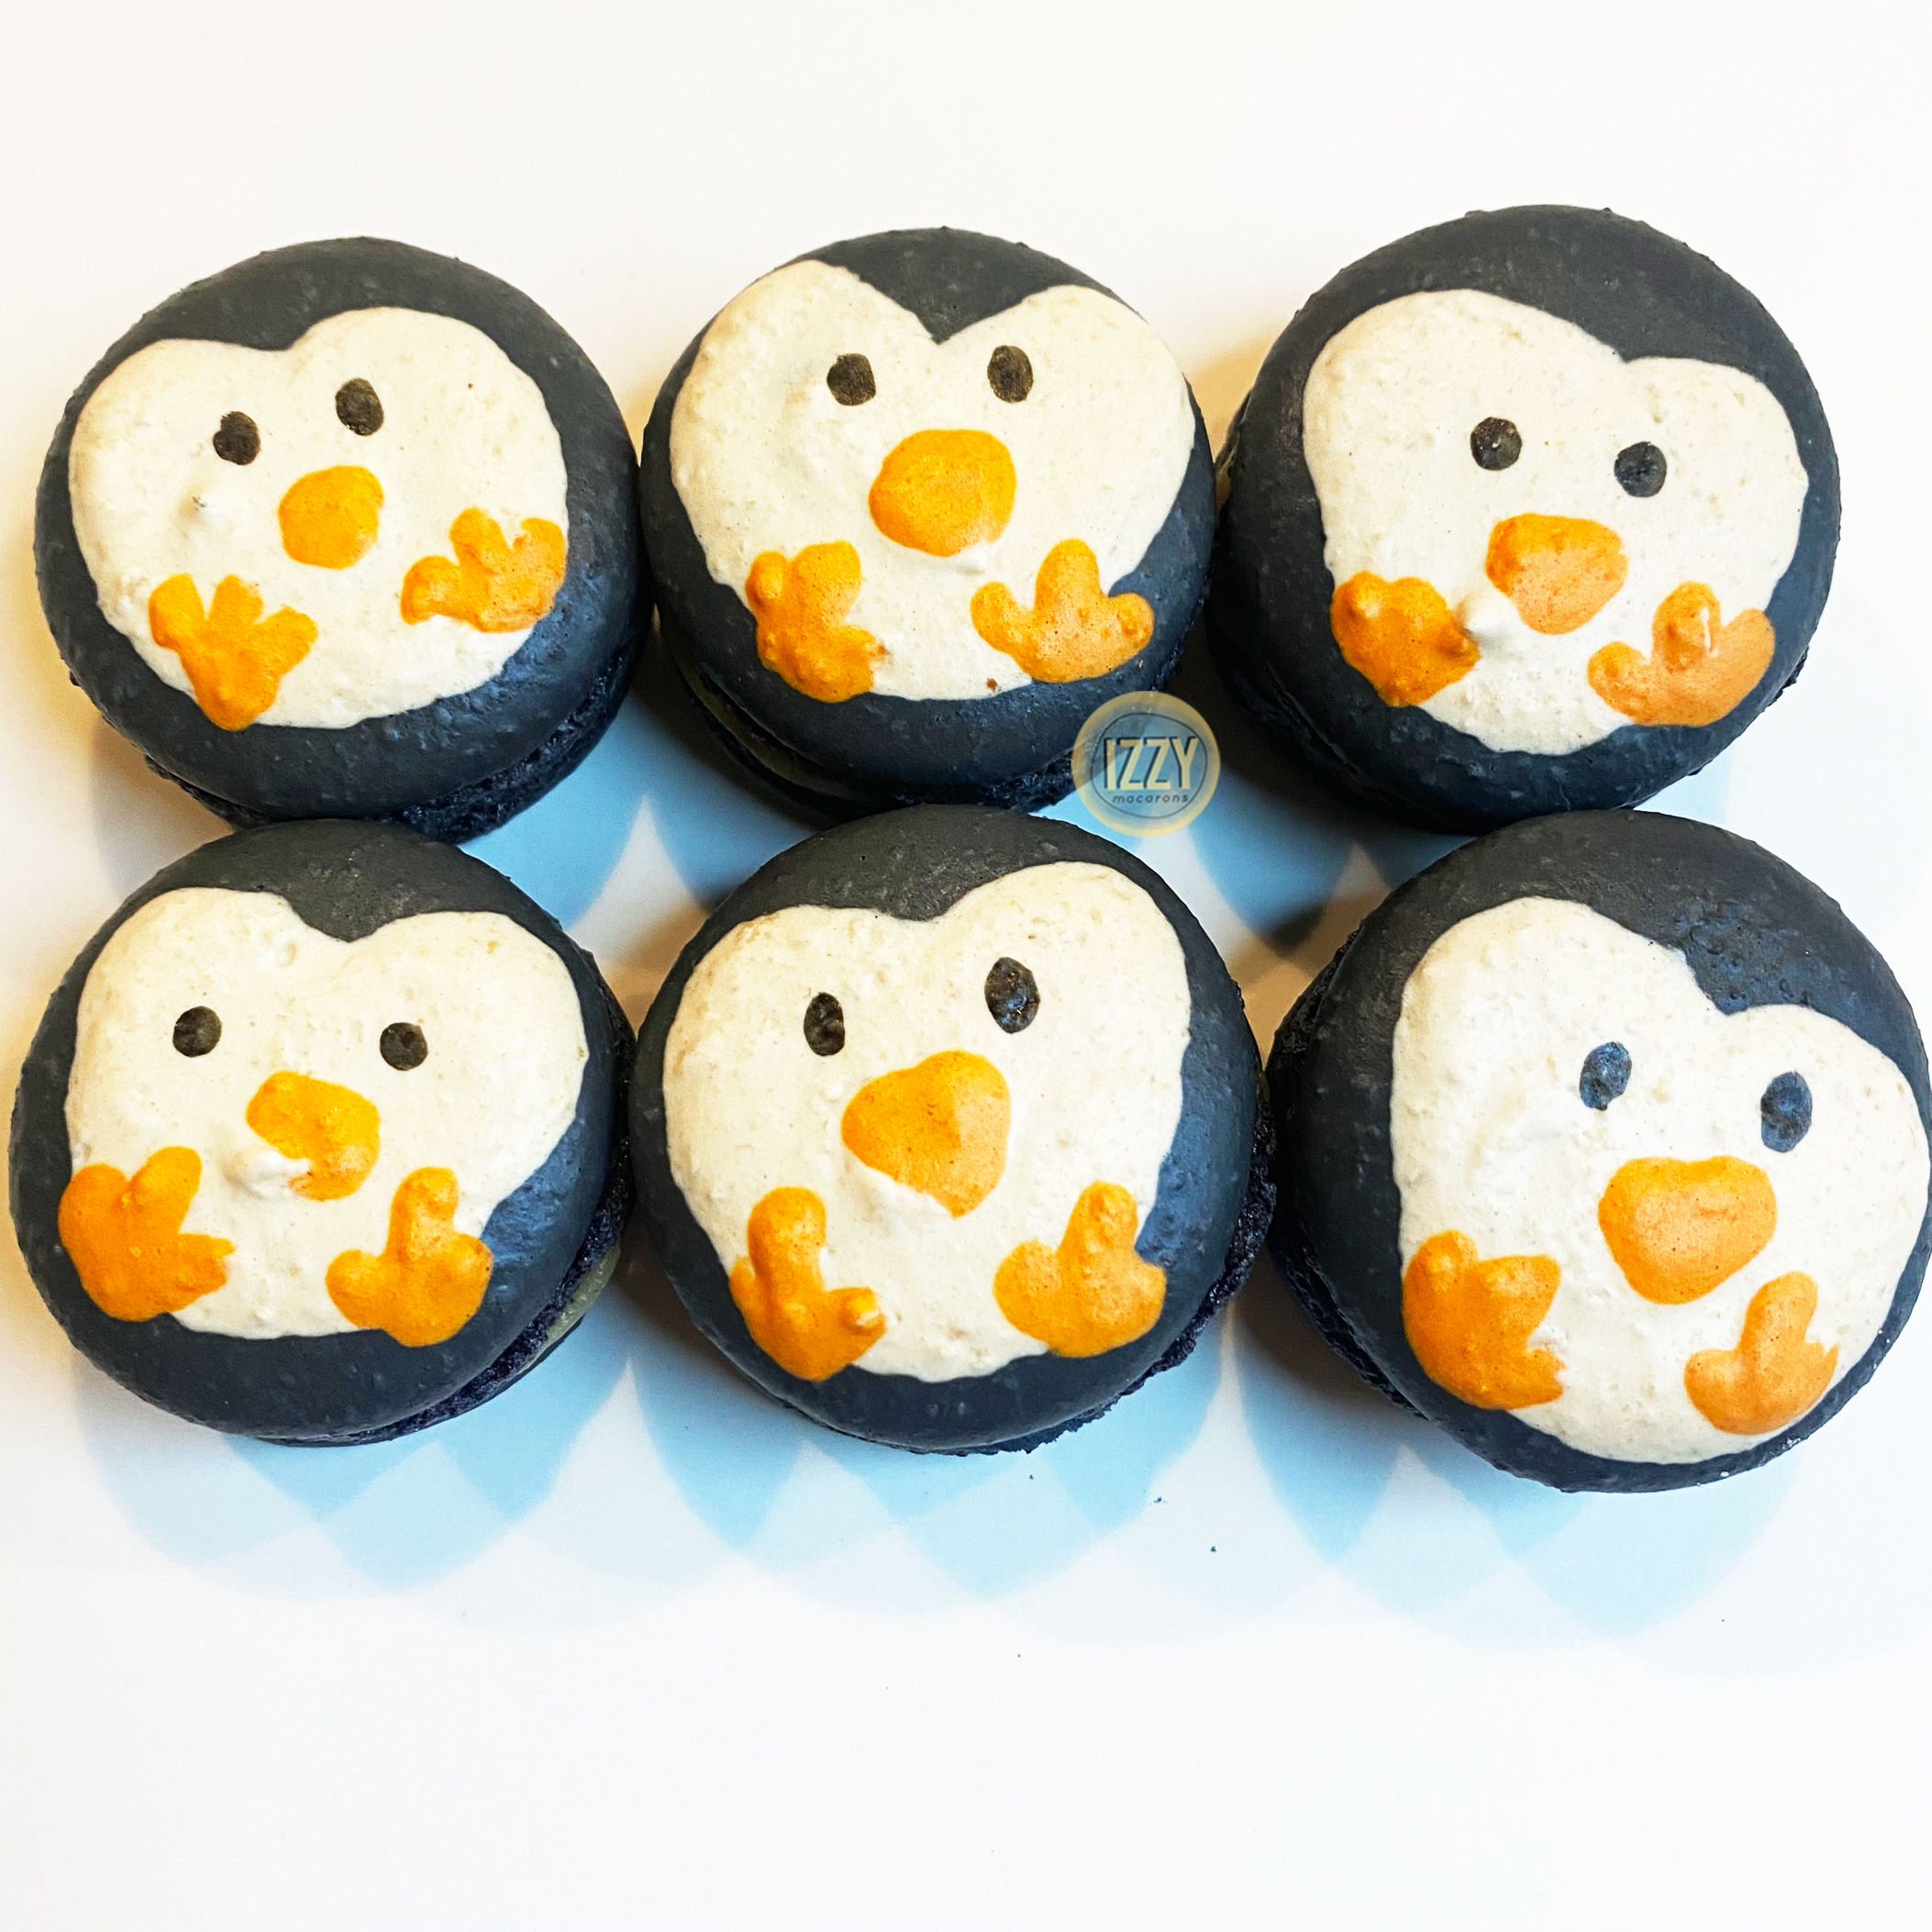 Penguin Macaron Christmas Edition - Izzy Macarons